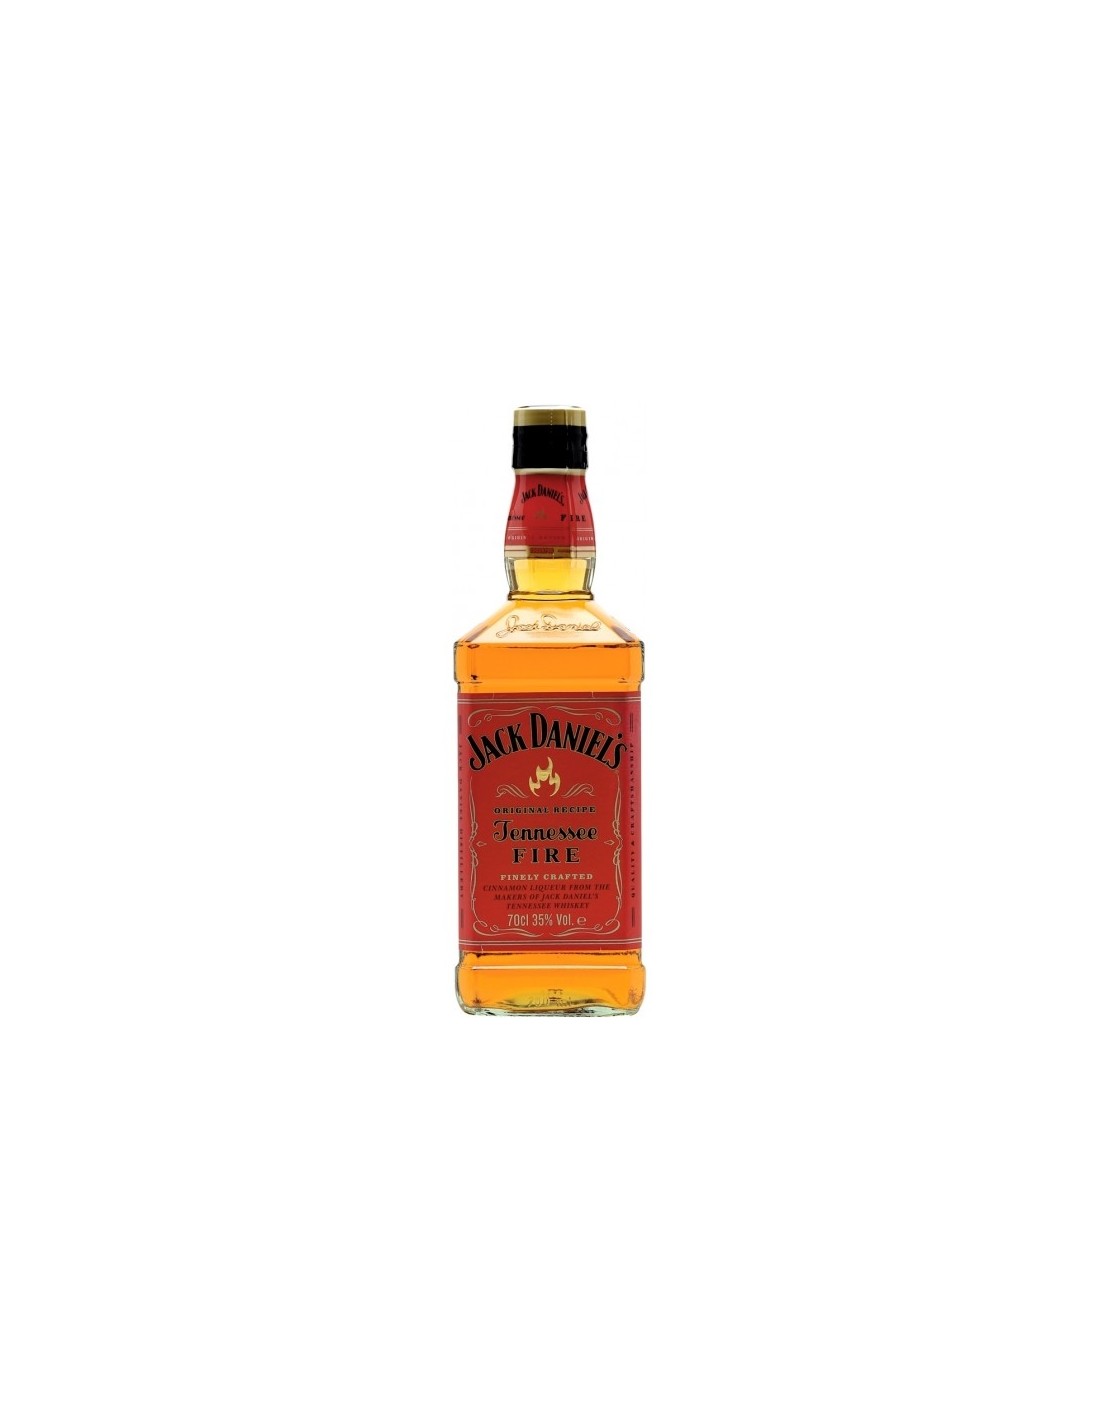 Whisky Jack Daniel's Fire 0.7L, 35% alc., America